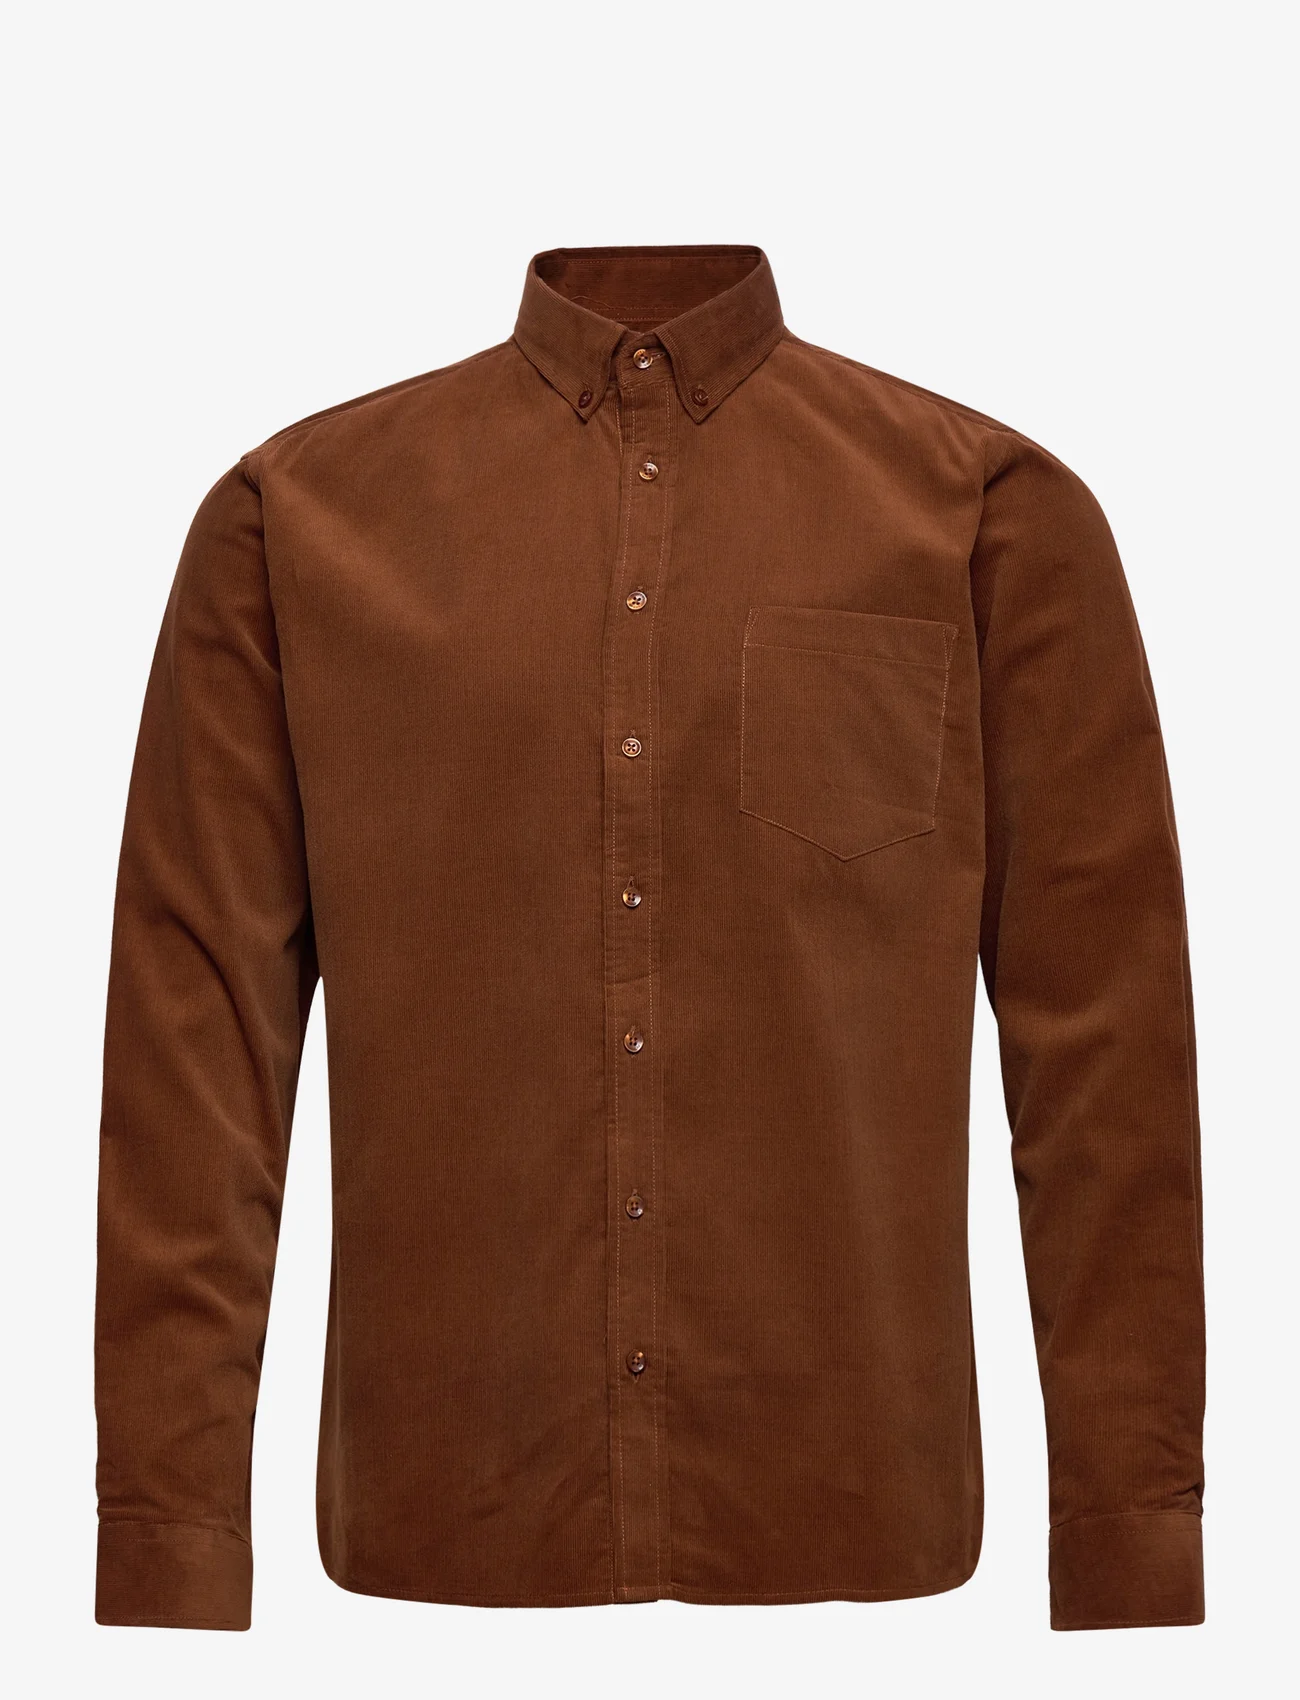 Urban Pioneers - Obama Shirt - corduroy shirts - rust - 0